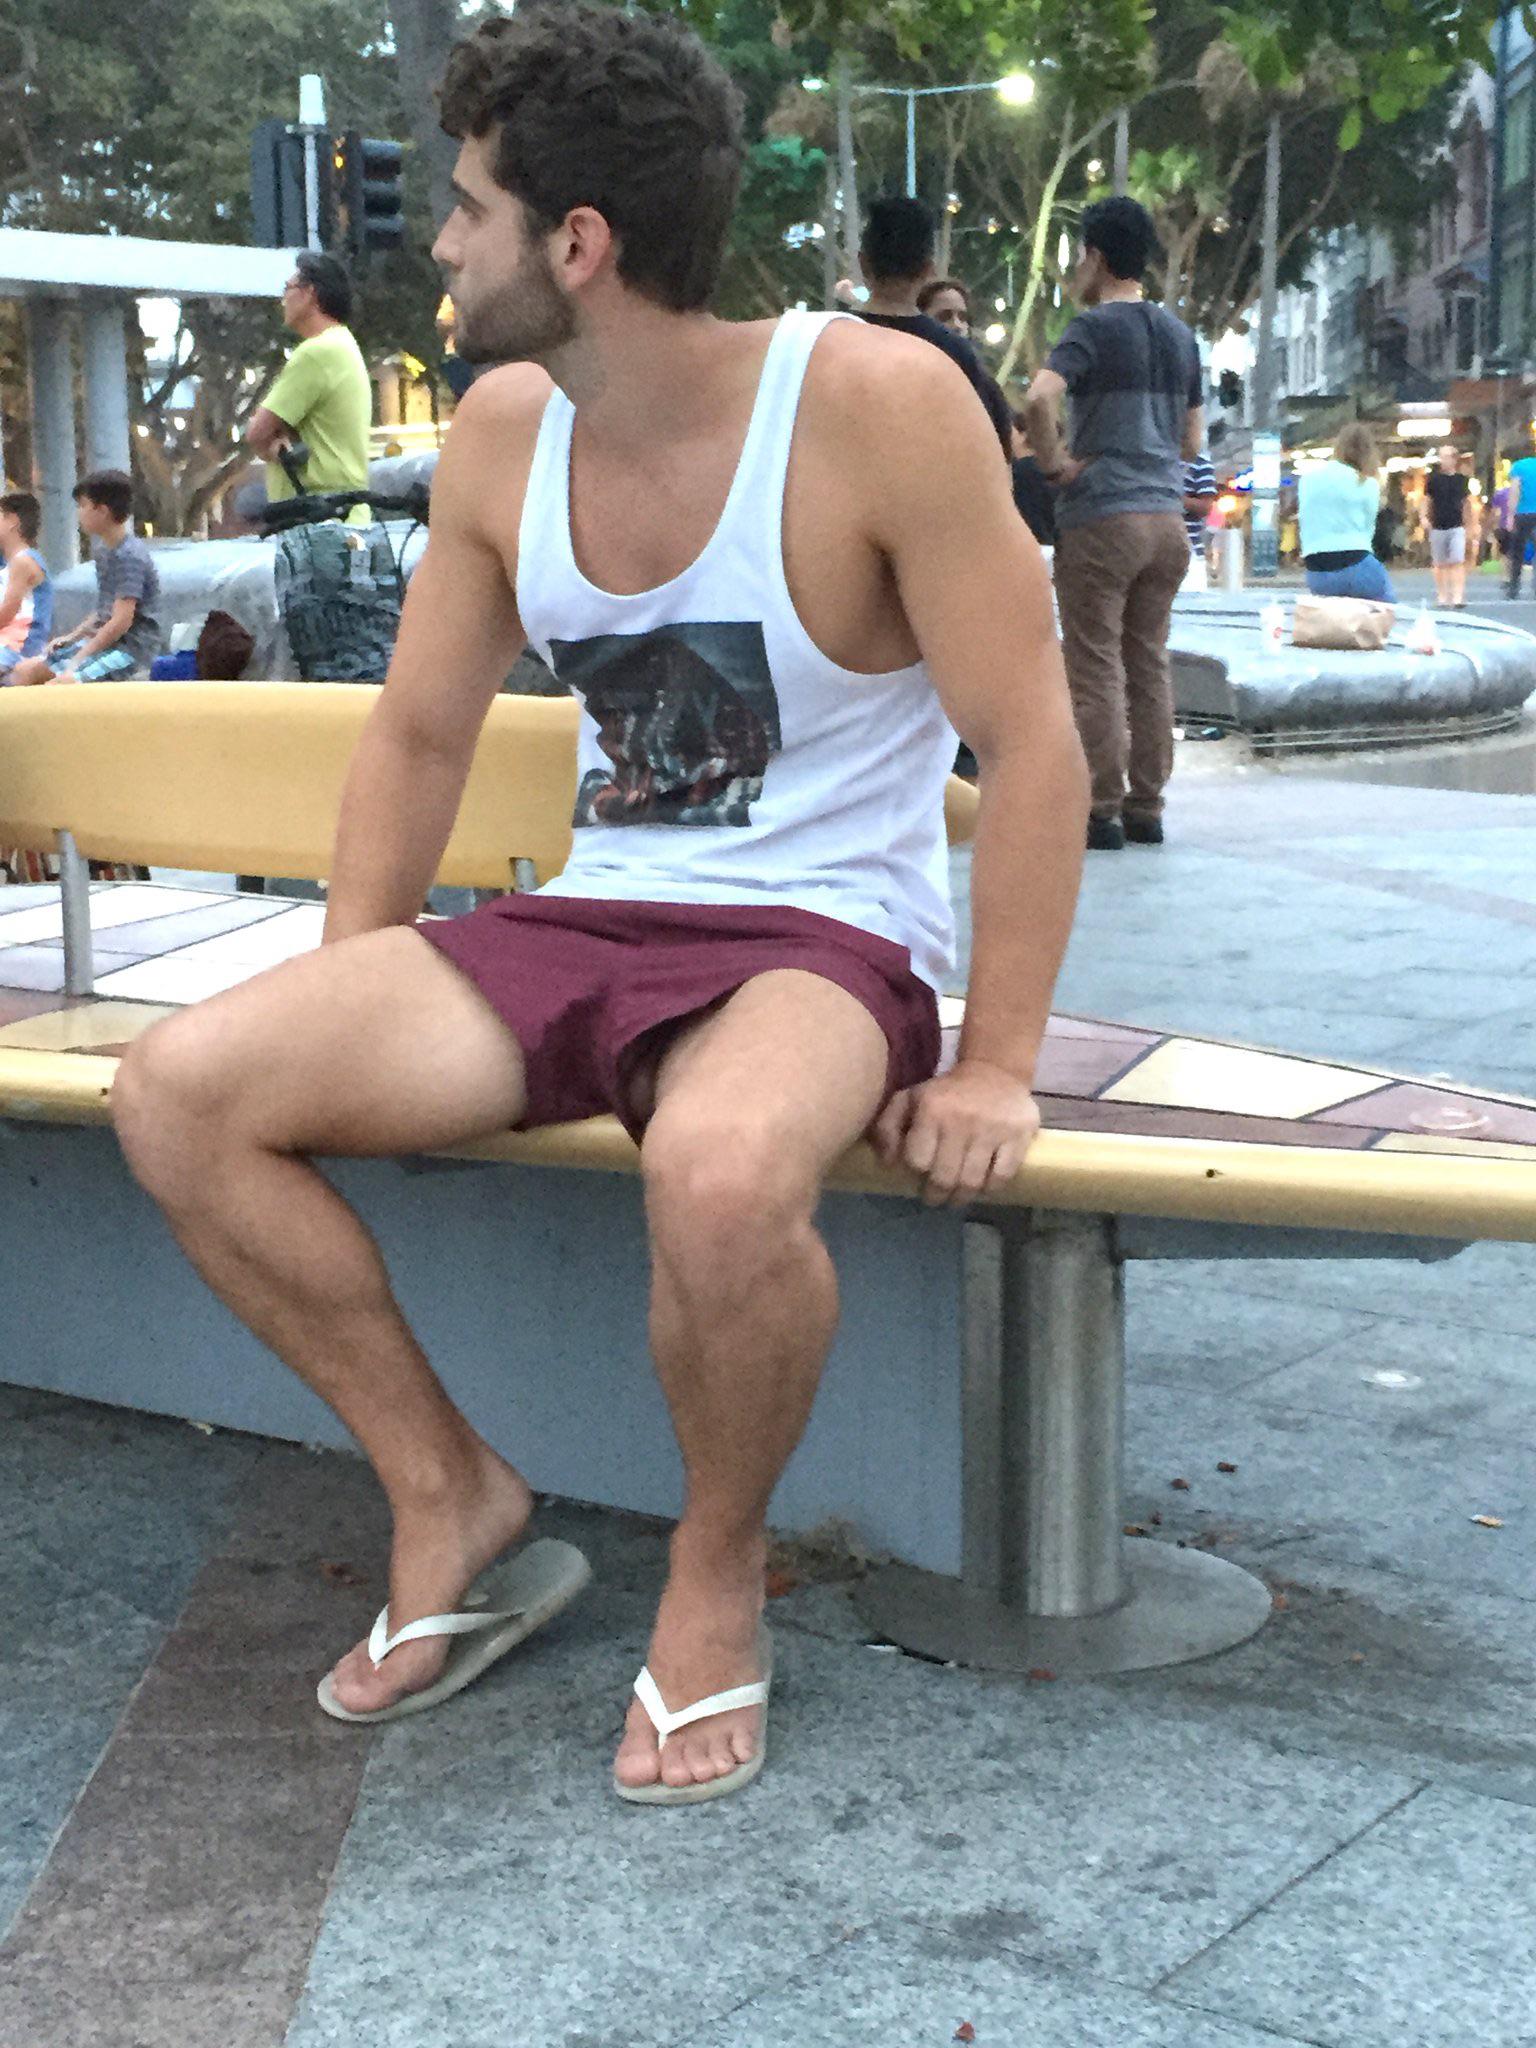 Mens dicks showing through shorts while sitting